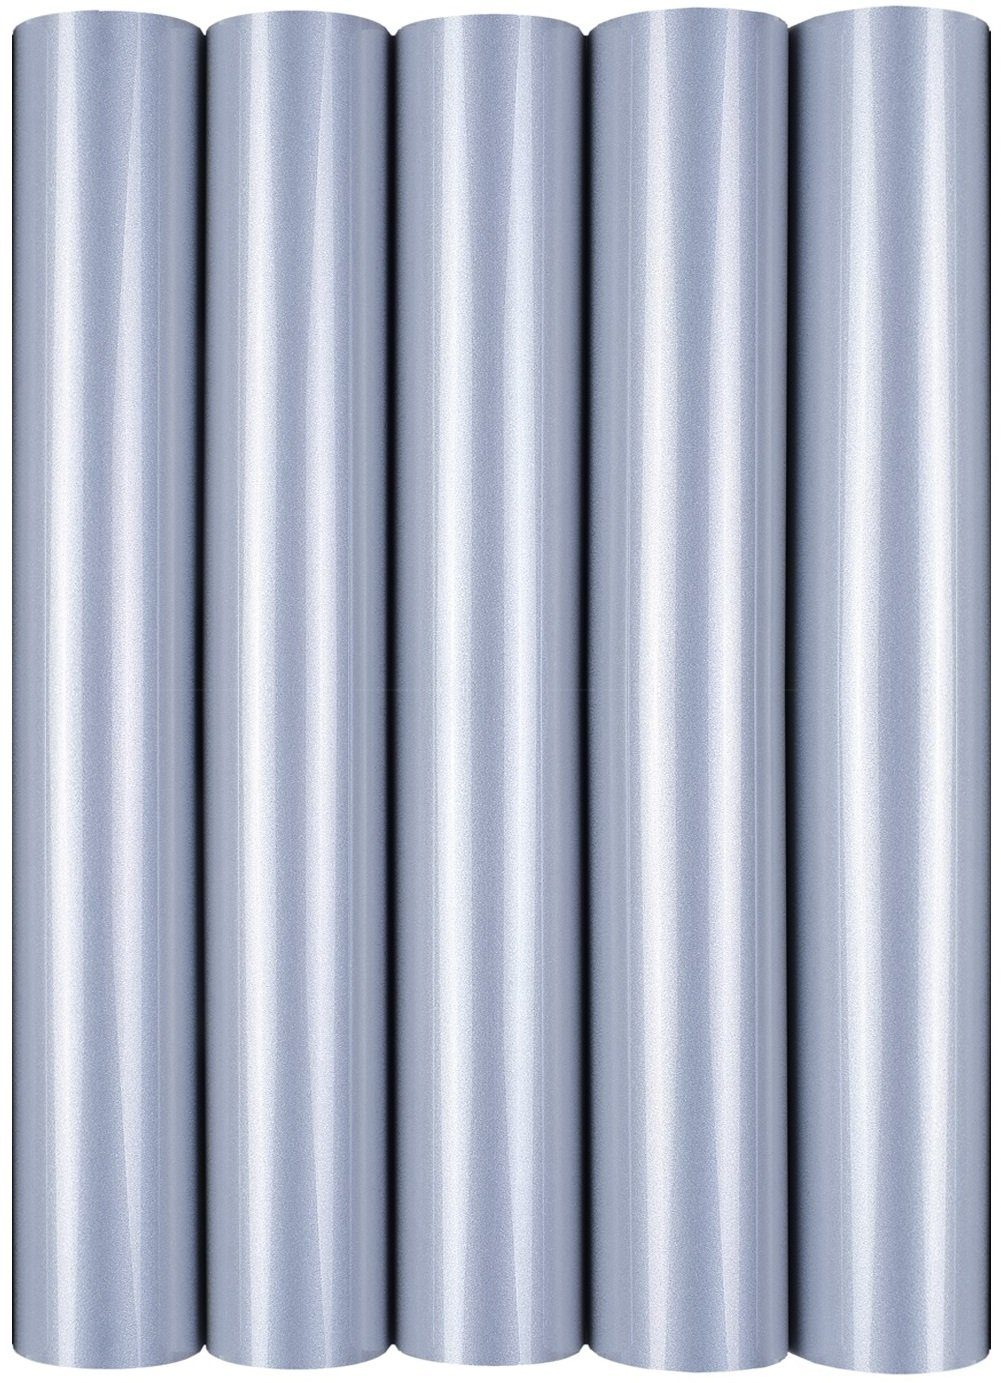 Reflective Textilfolie, 30x20 cm Reflektierende mehrfarbig, Hilltop Transparentpapier Transferfolie, Silver